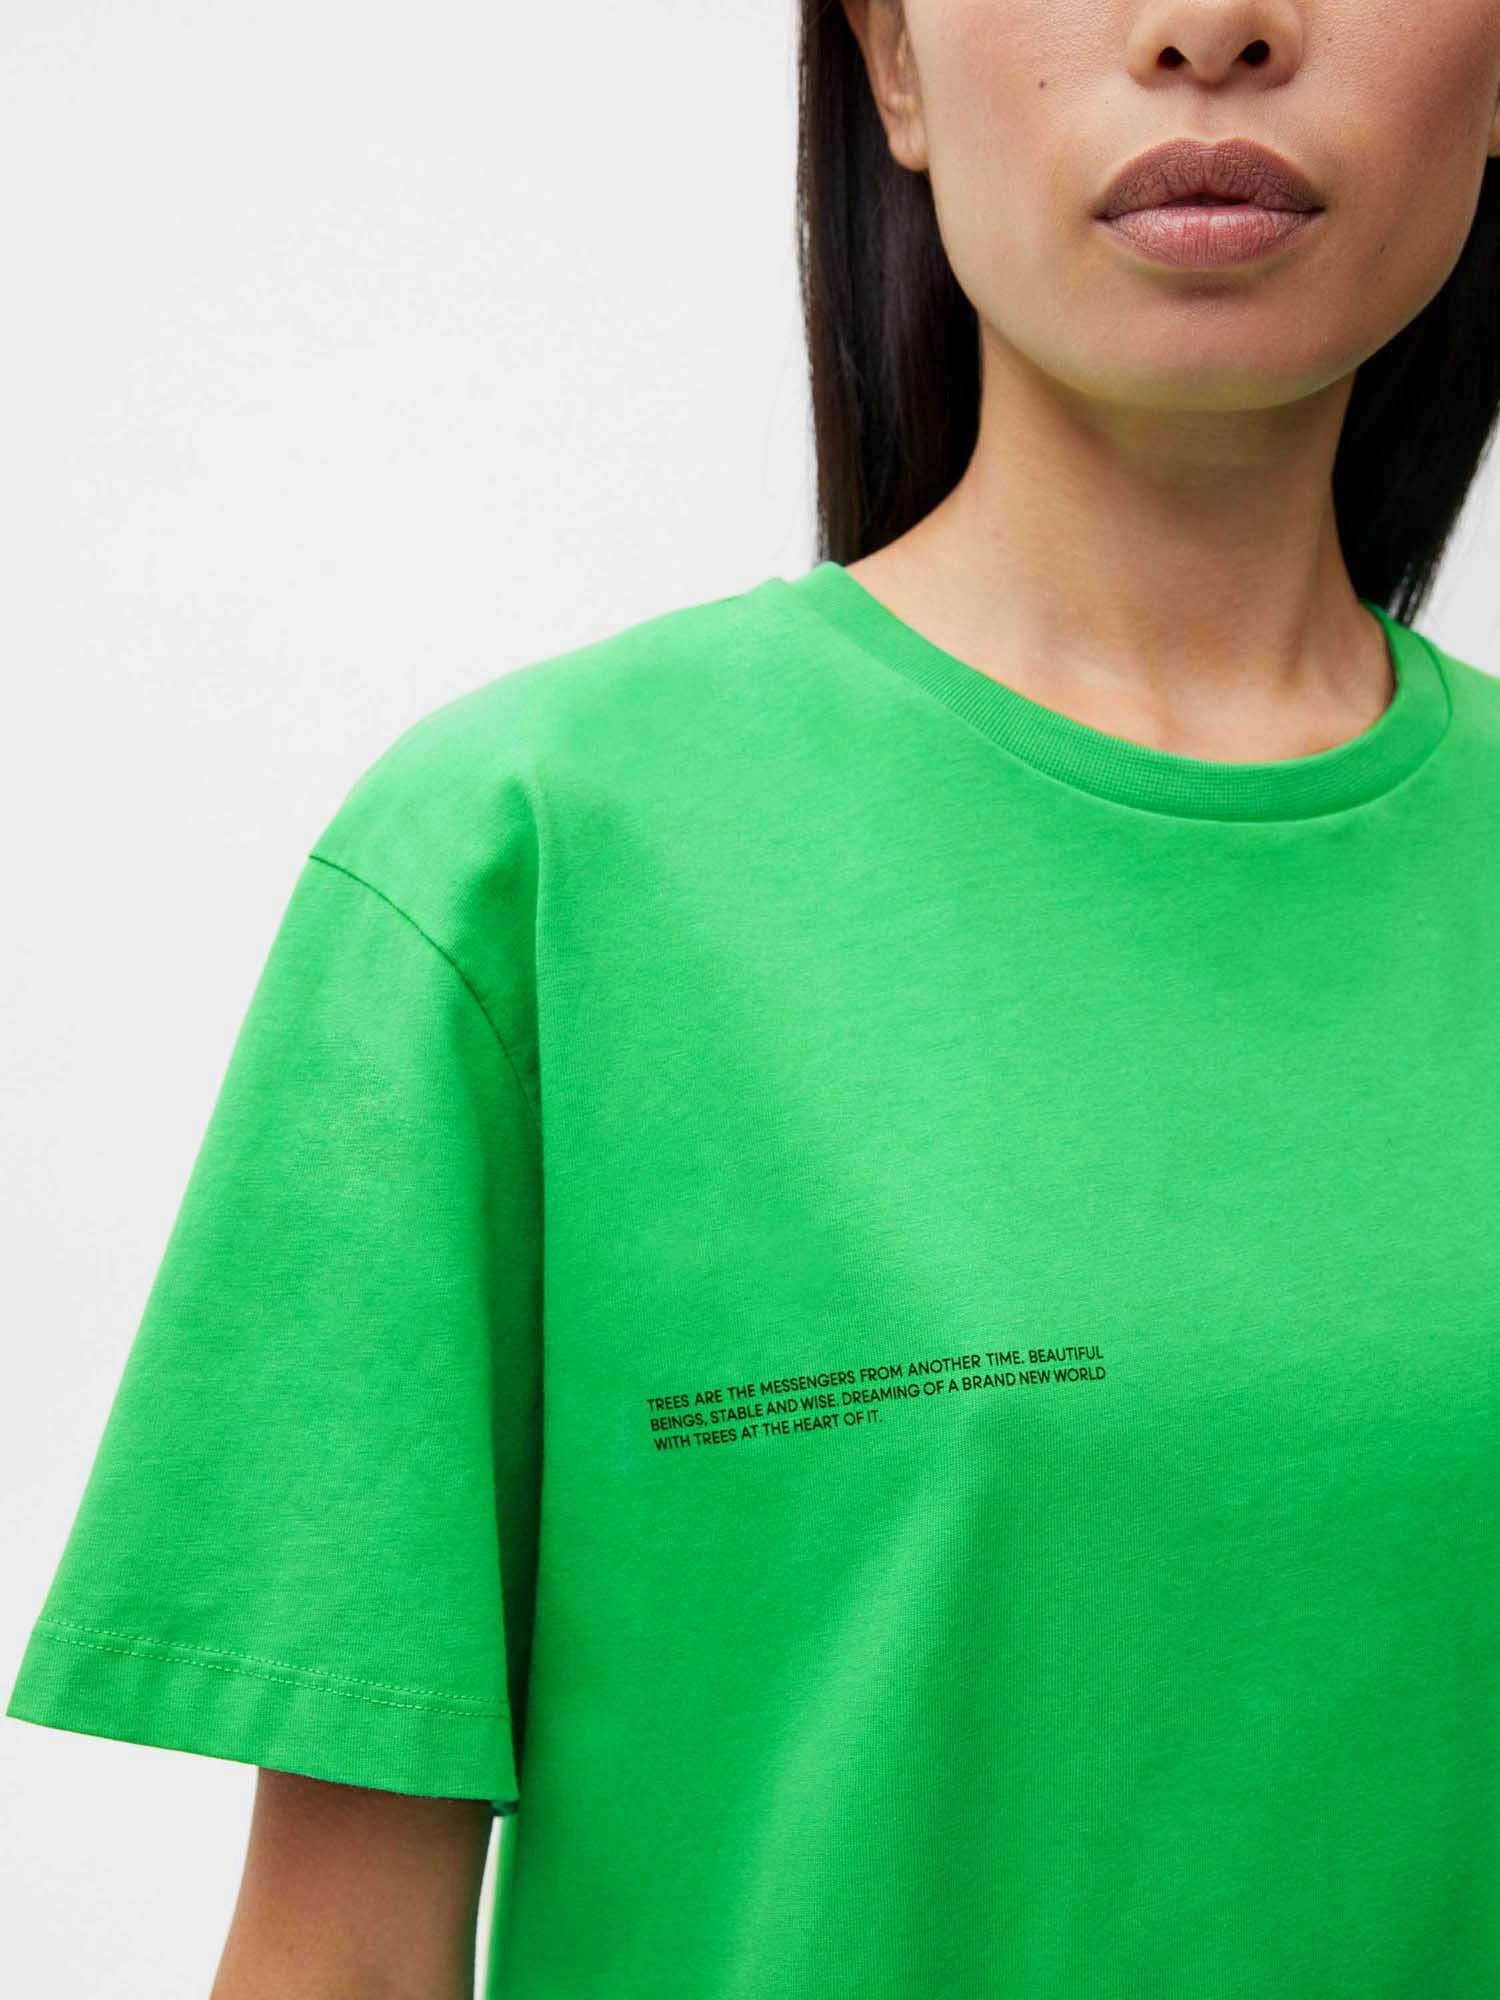 https://cdn.shopify.com/s/files/1/0035/1309/0115/products/Pangaia-Kenny-Scharf-Organic-Cotton-T-Shirt-Paradis-Perdu-Jade-Green-Female-2.jpg?v=1662734802